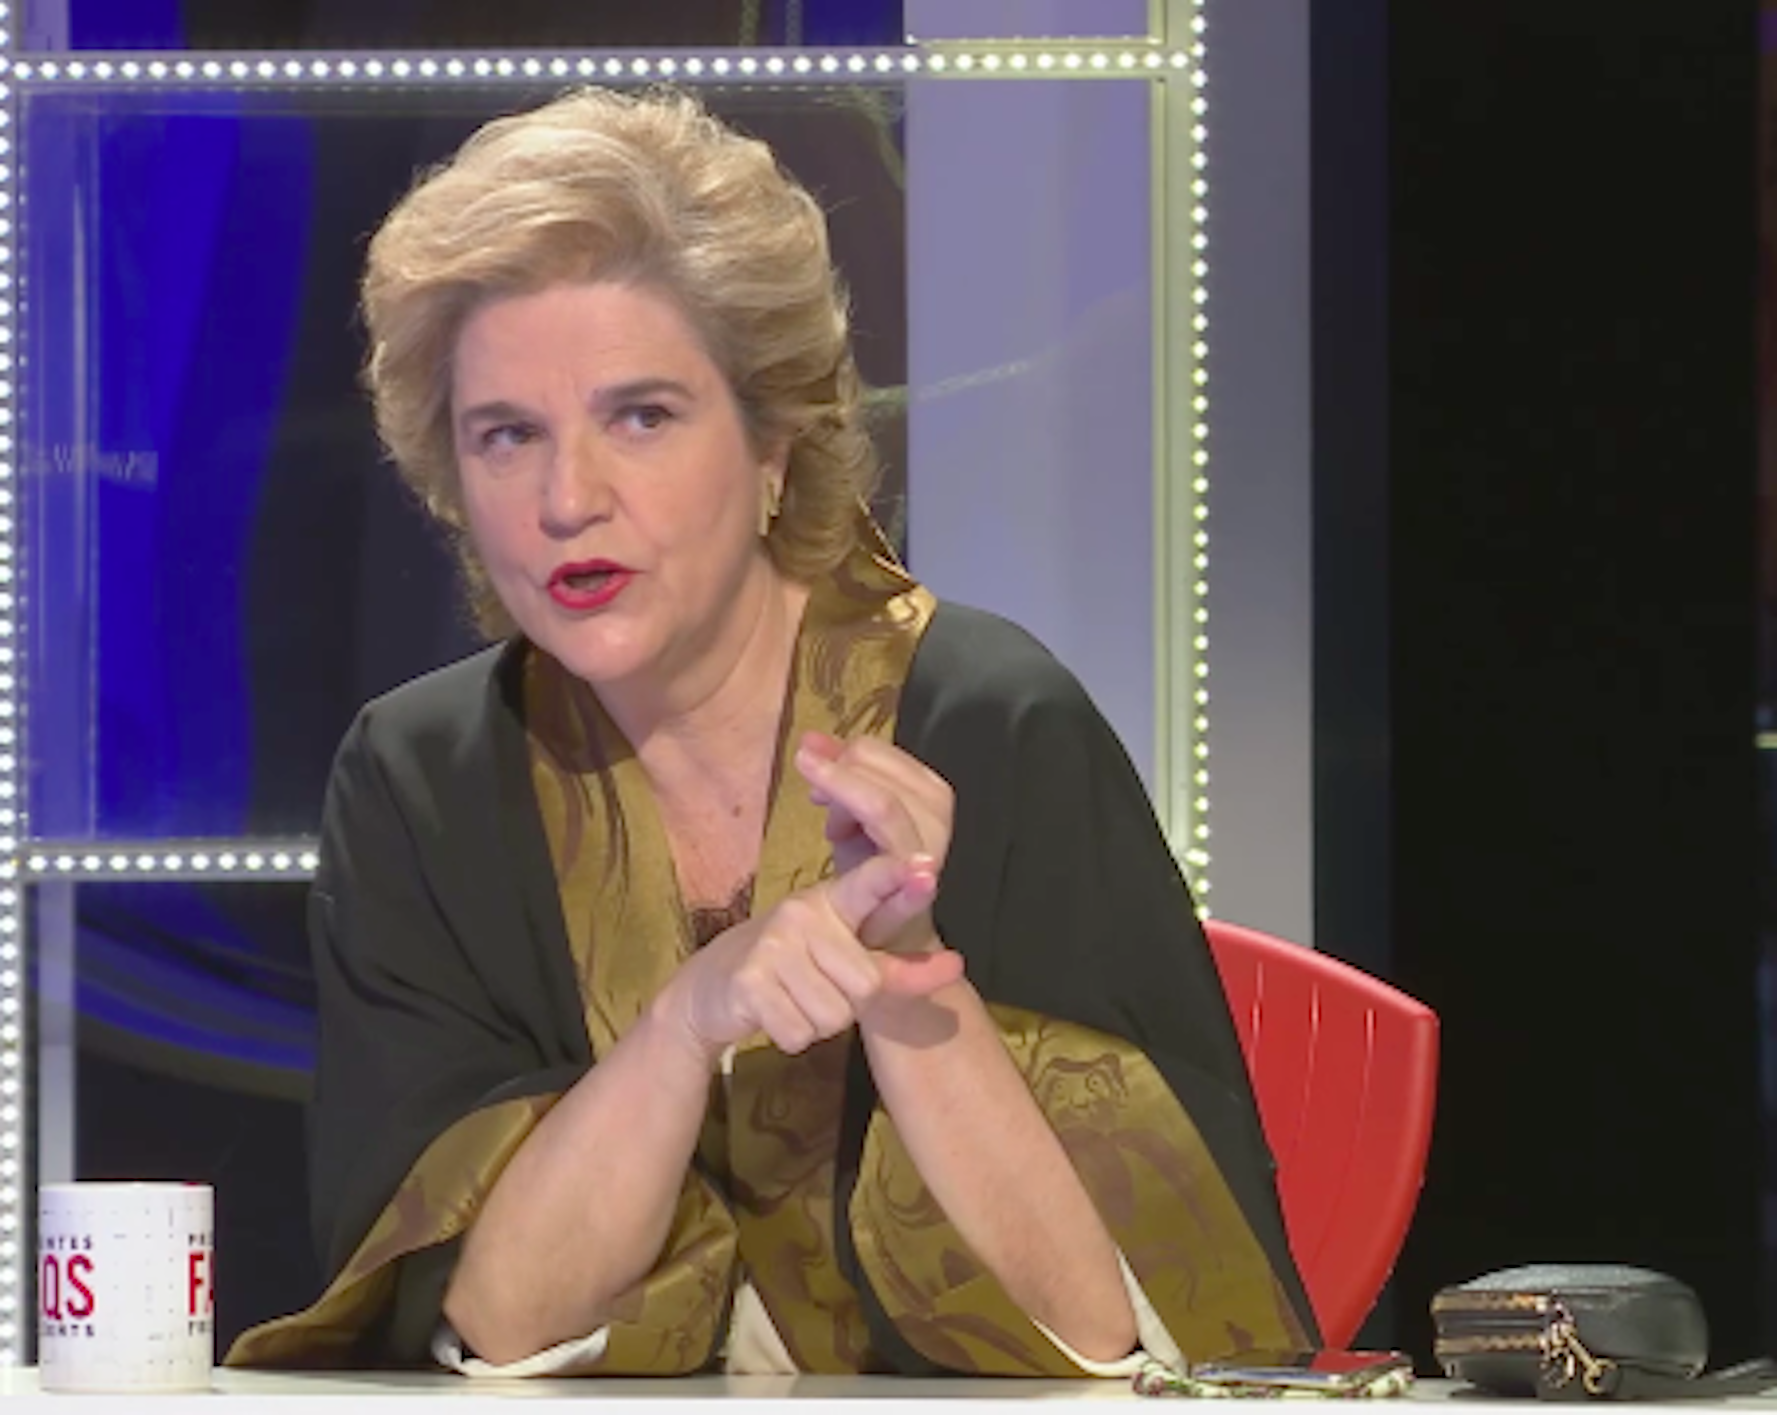 Aplaudida galleta de Pilar Rahola a Víctor Amela, contra TV3: "Cúrate la..."